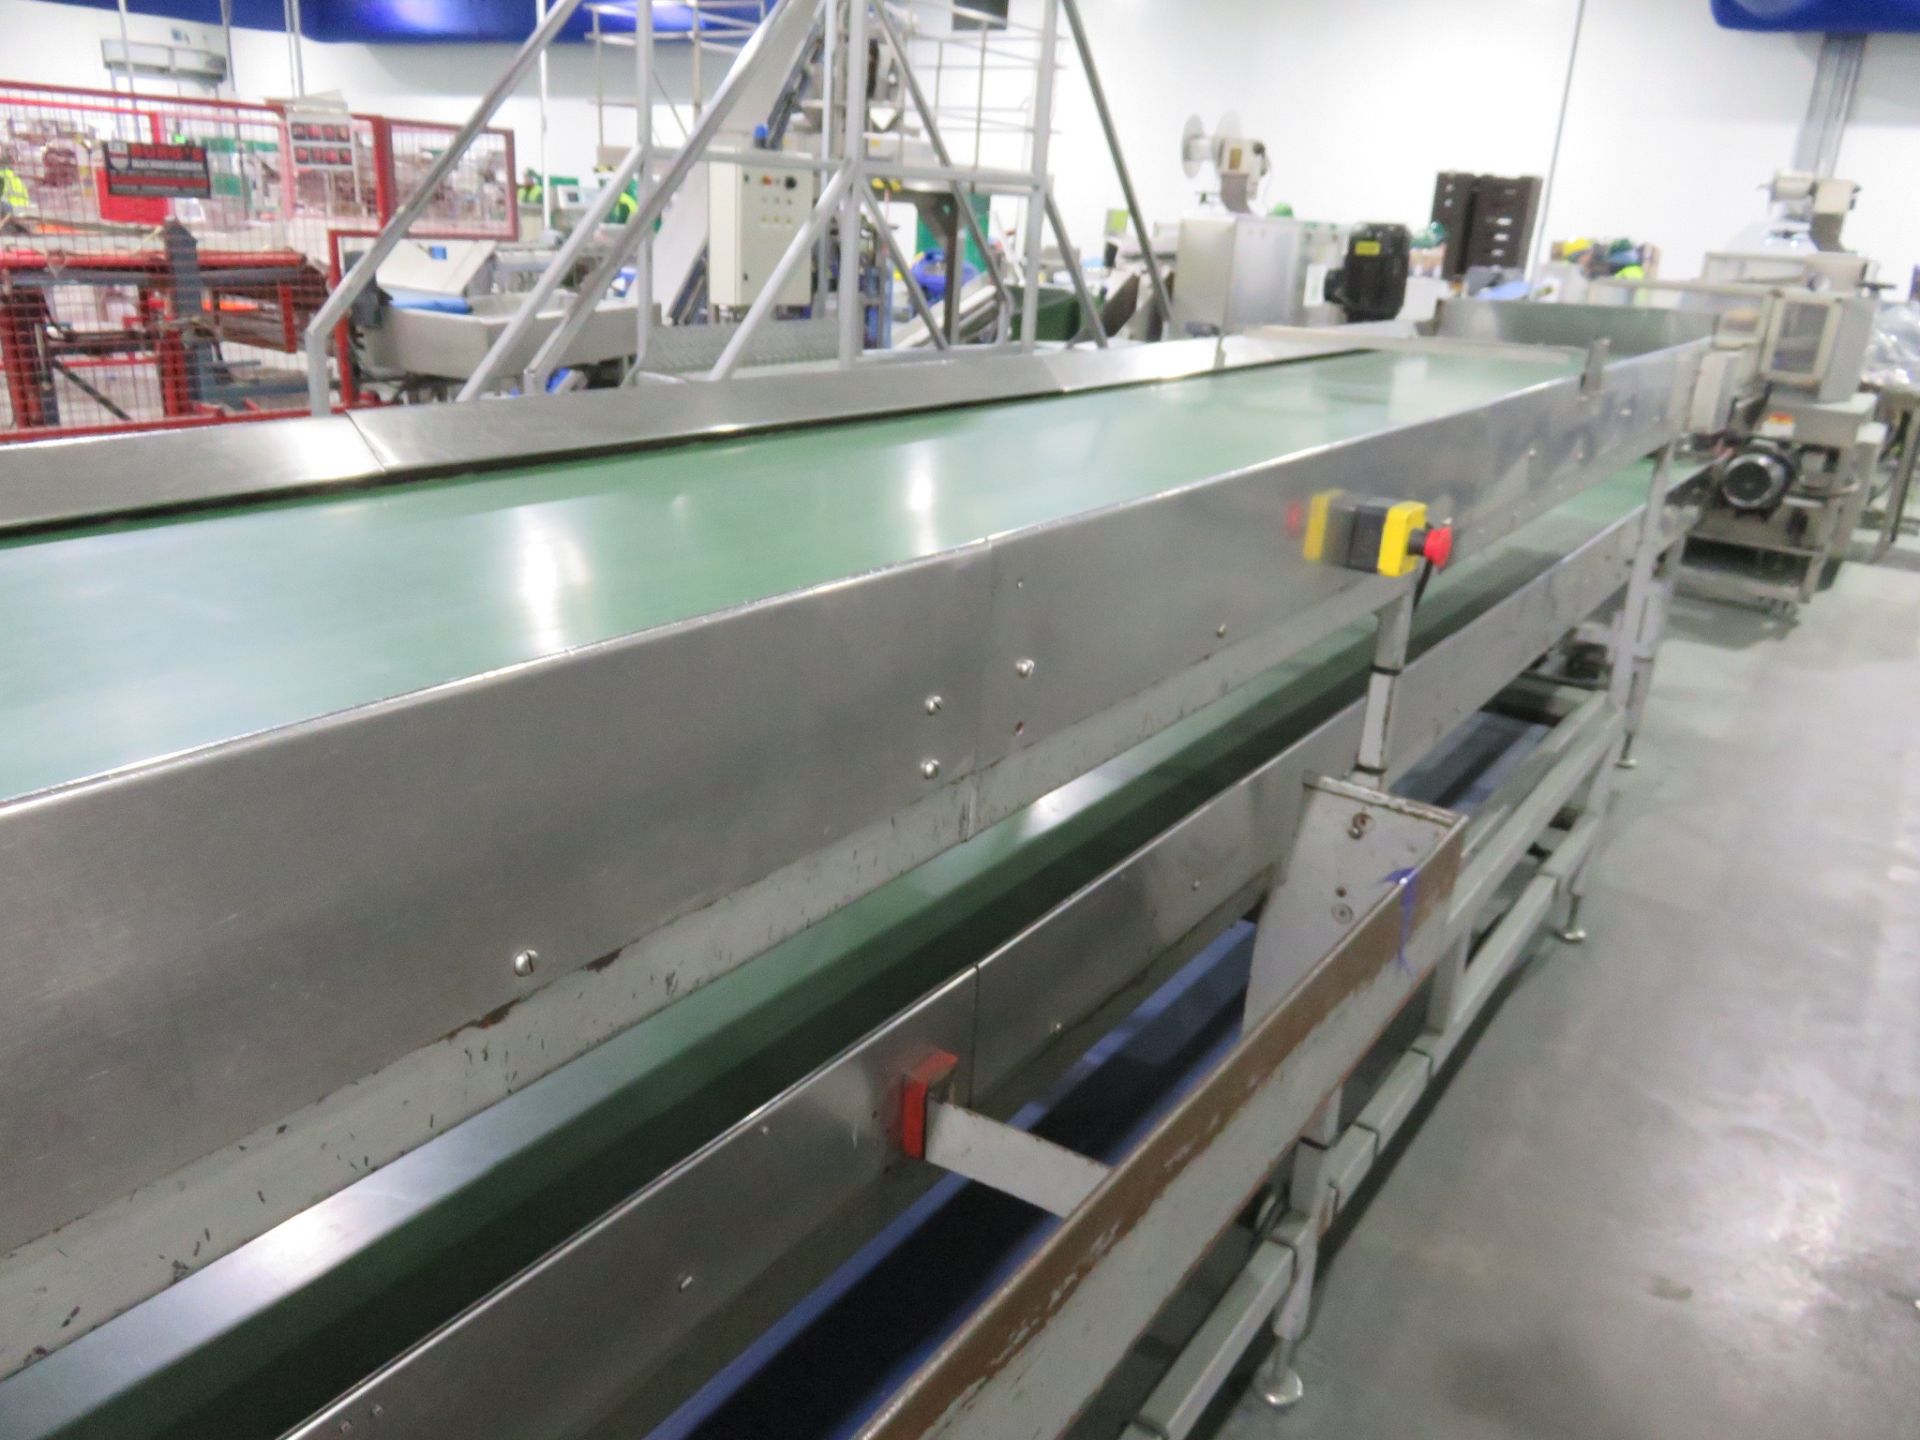 3 Tier sorting conveyor, top & bottom tier 4 mfr long, middle tier 6 mfr long with PEC flow control - Image 2 of 5